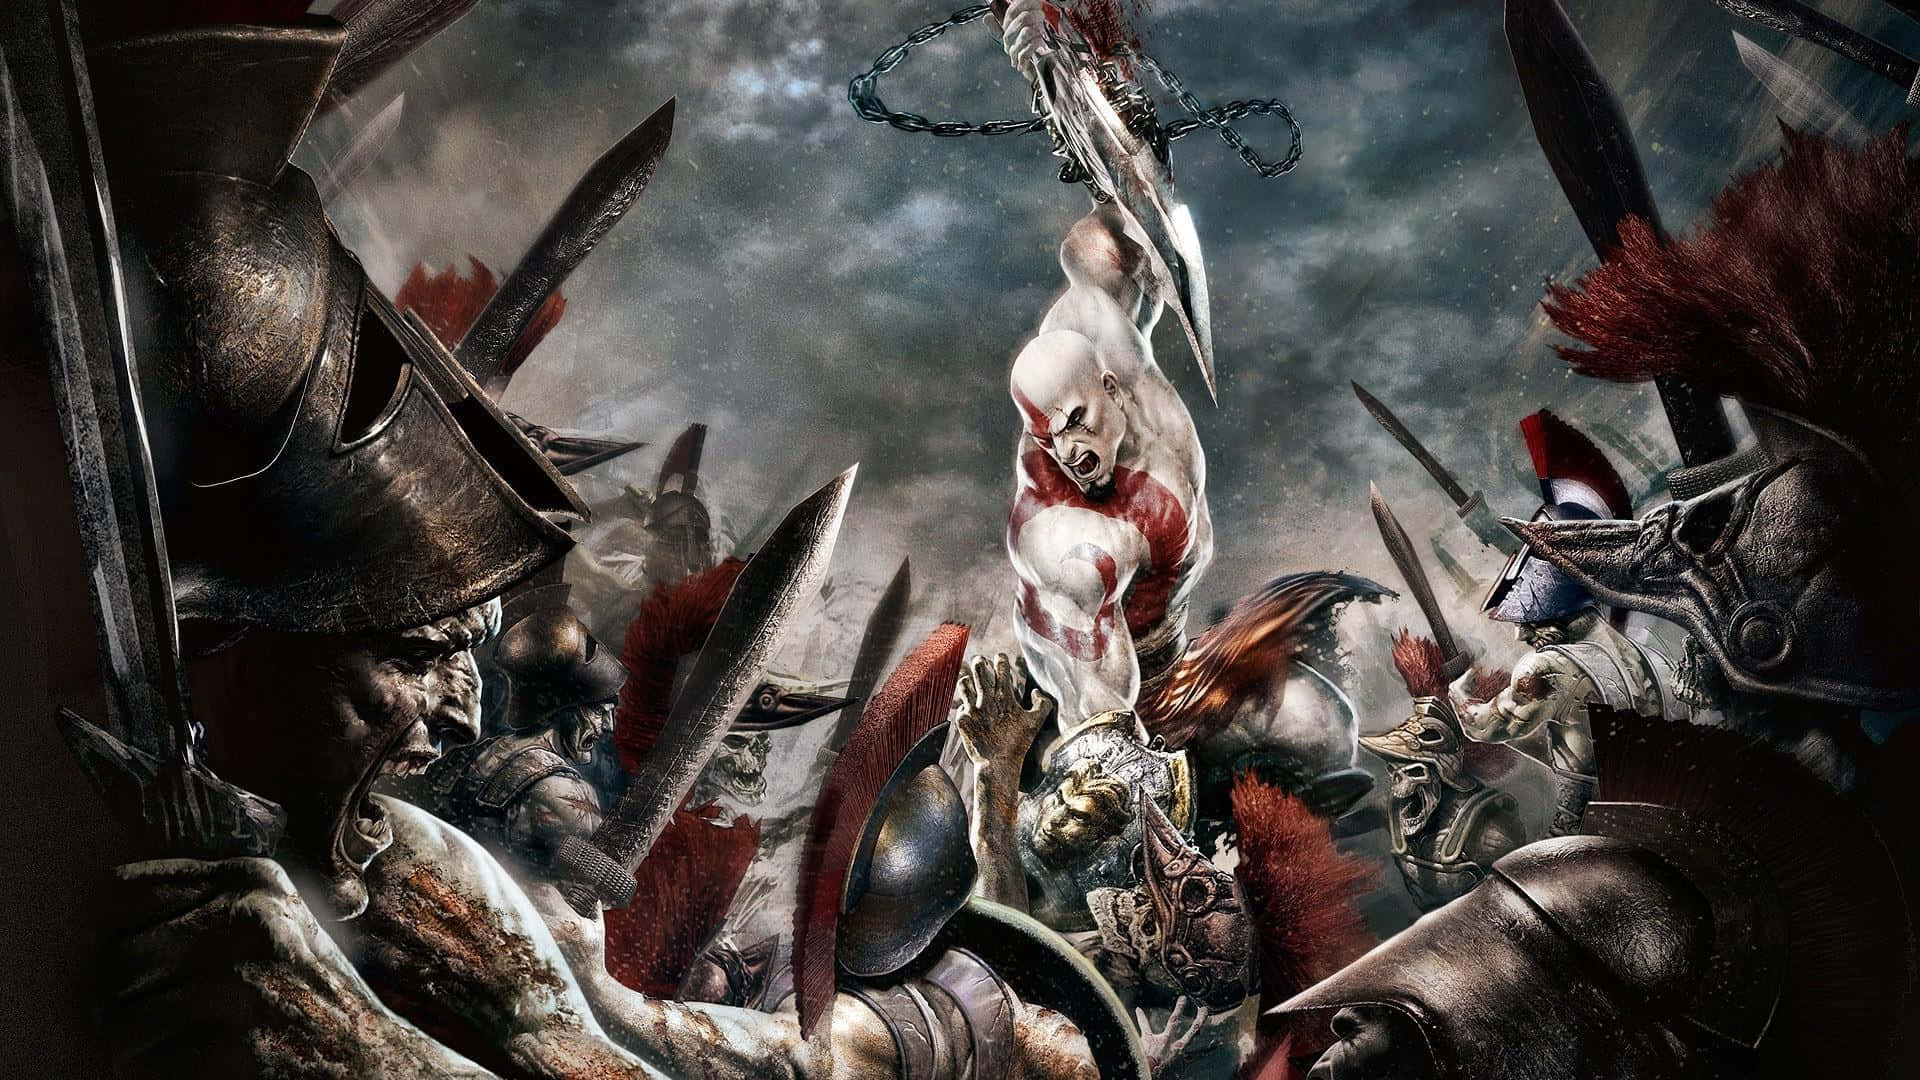 Kratos and Atreus embarking on an epic adventure in God of War